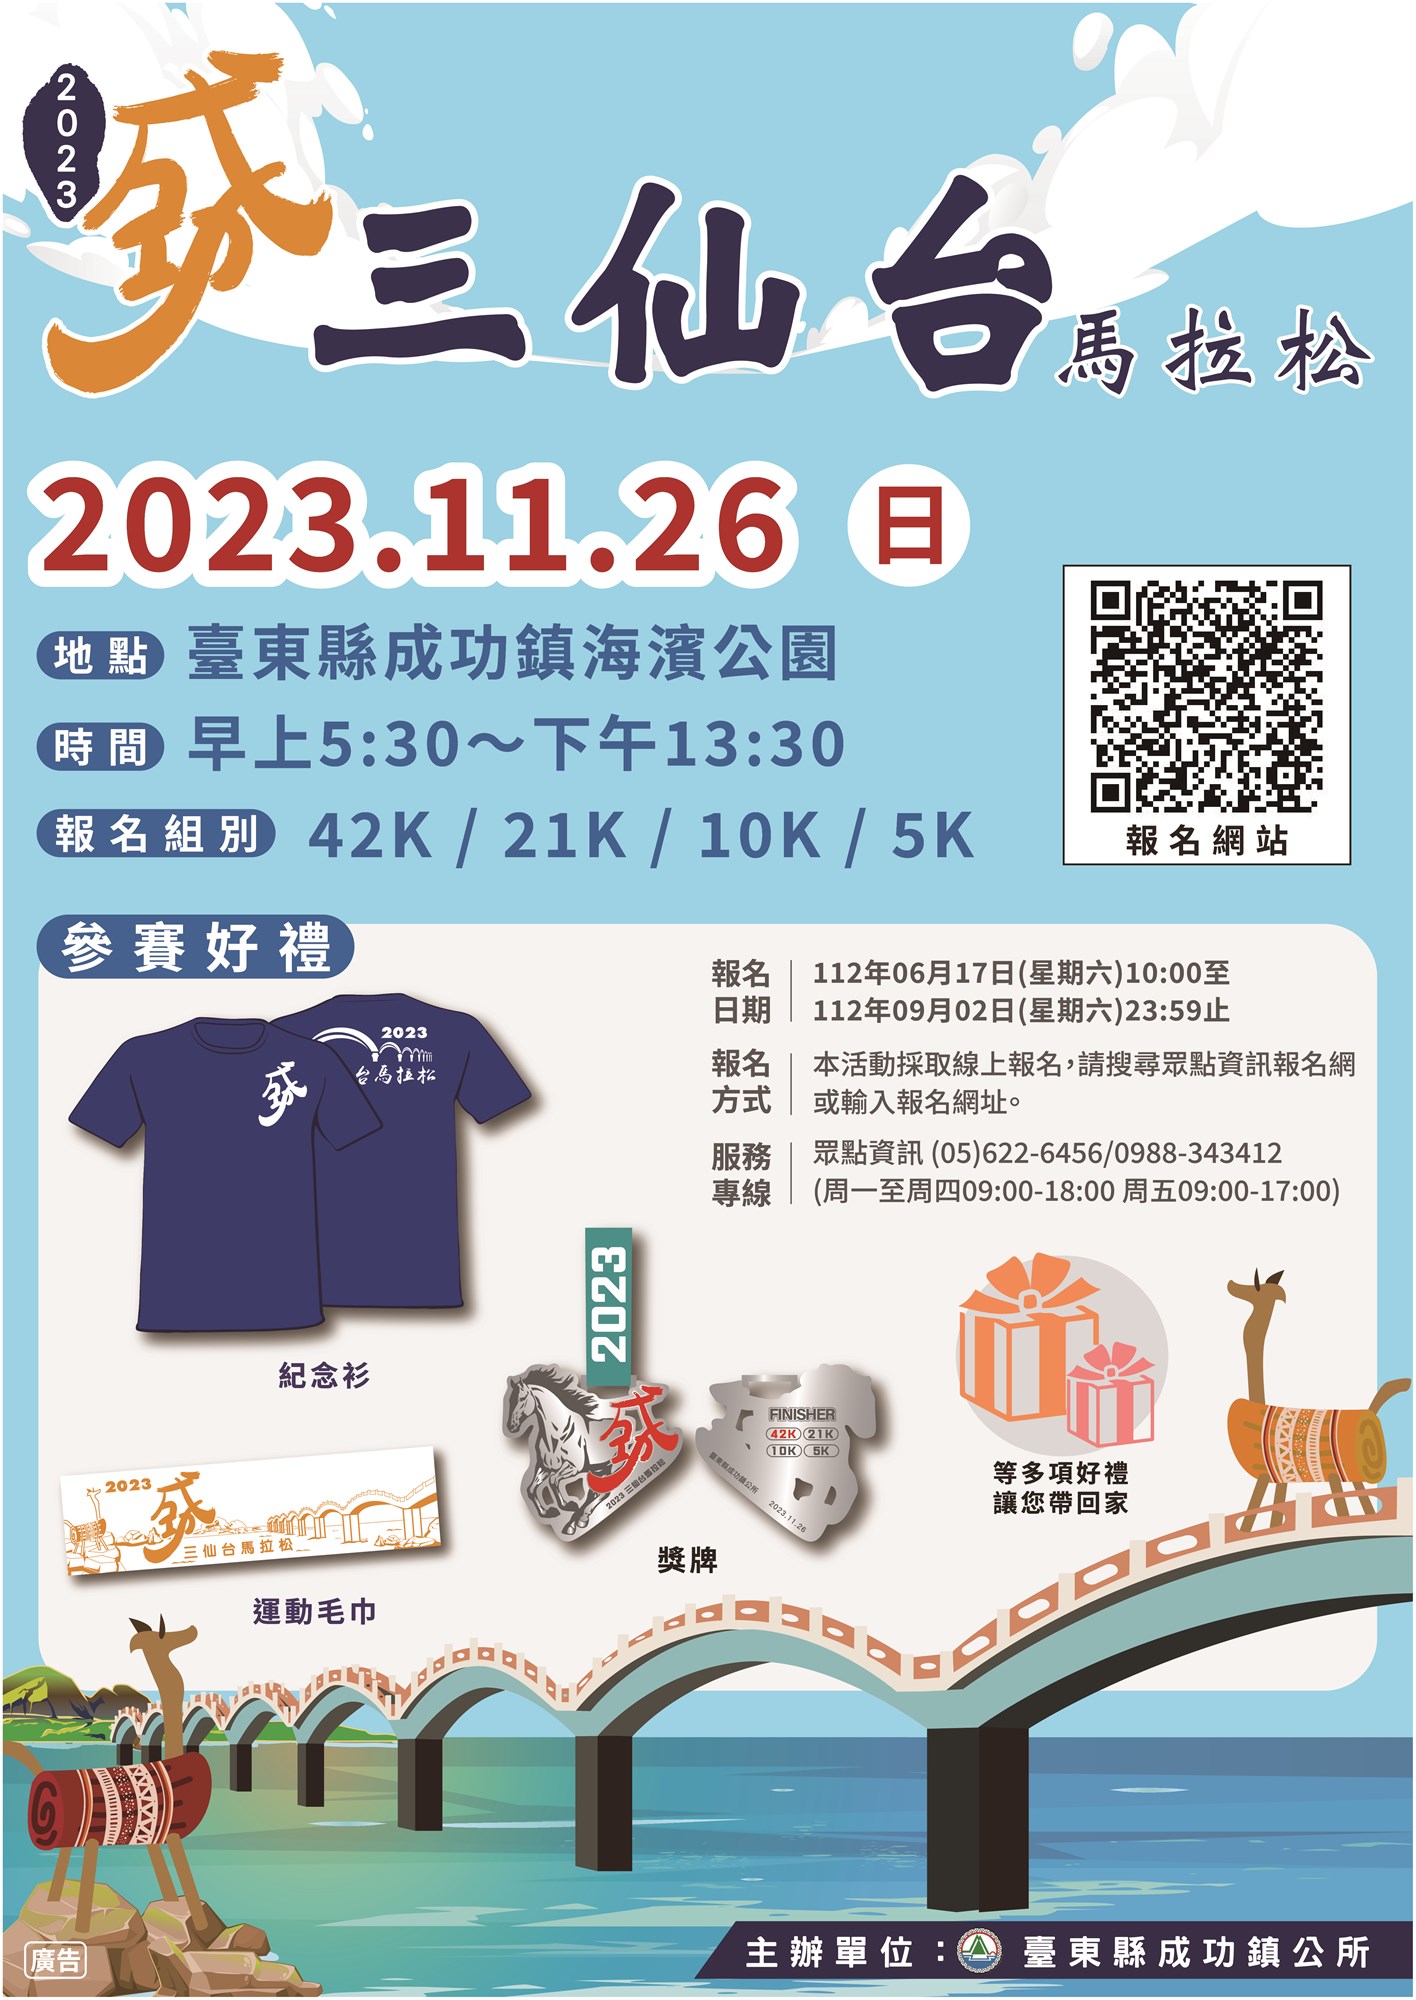 Taitung’s 2023 Sanxiantai Marathon Successful Event